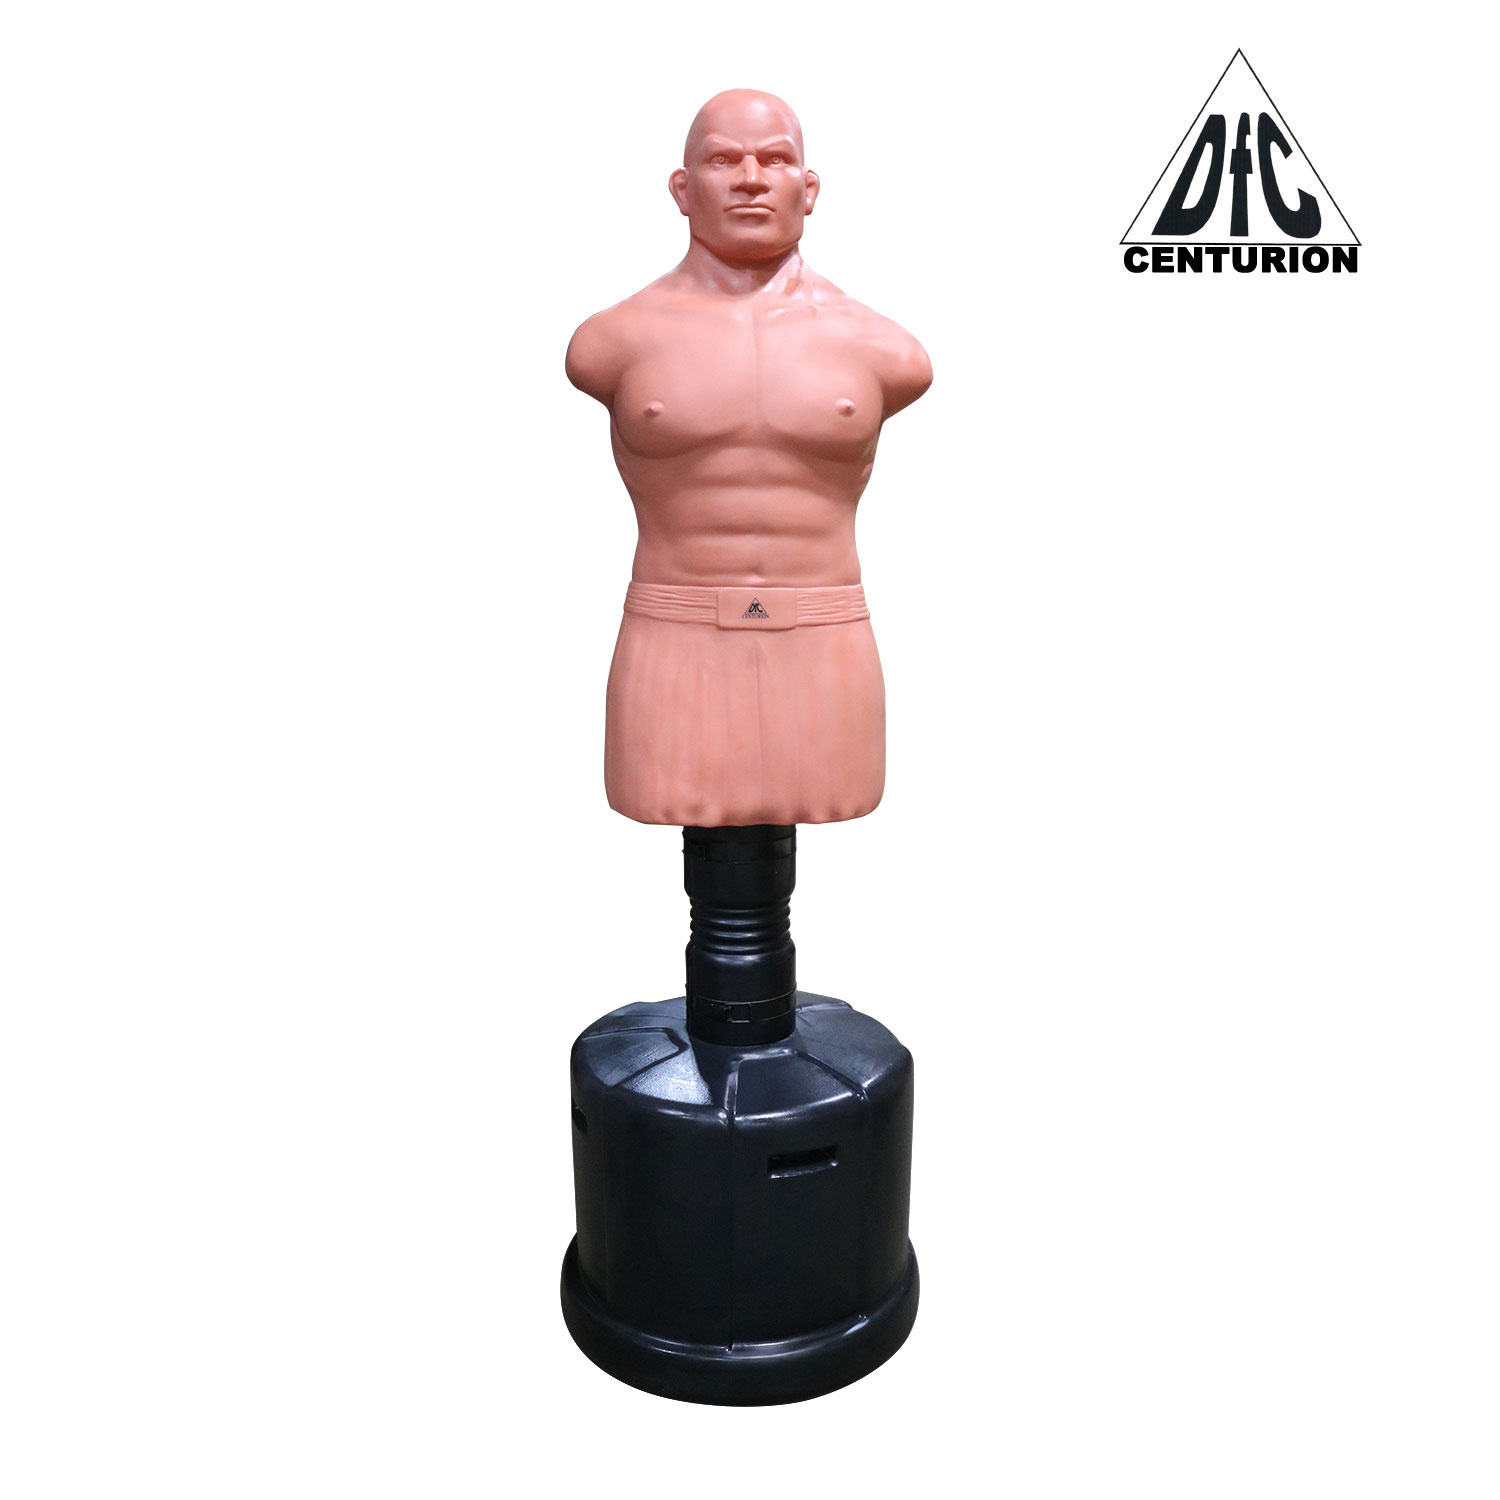 DFC Centurion Boxing Punching Man-Heavy водоналивной - бежевый из каталога манекенов для бокса в Москве по цене 45990 ₽